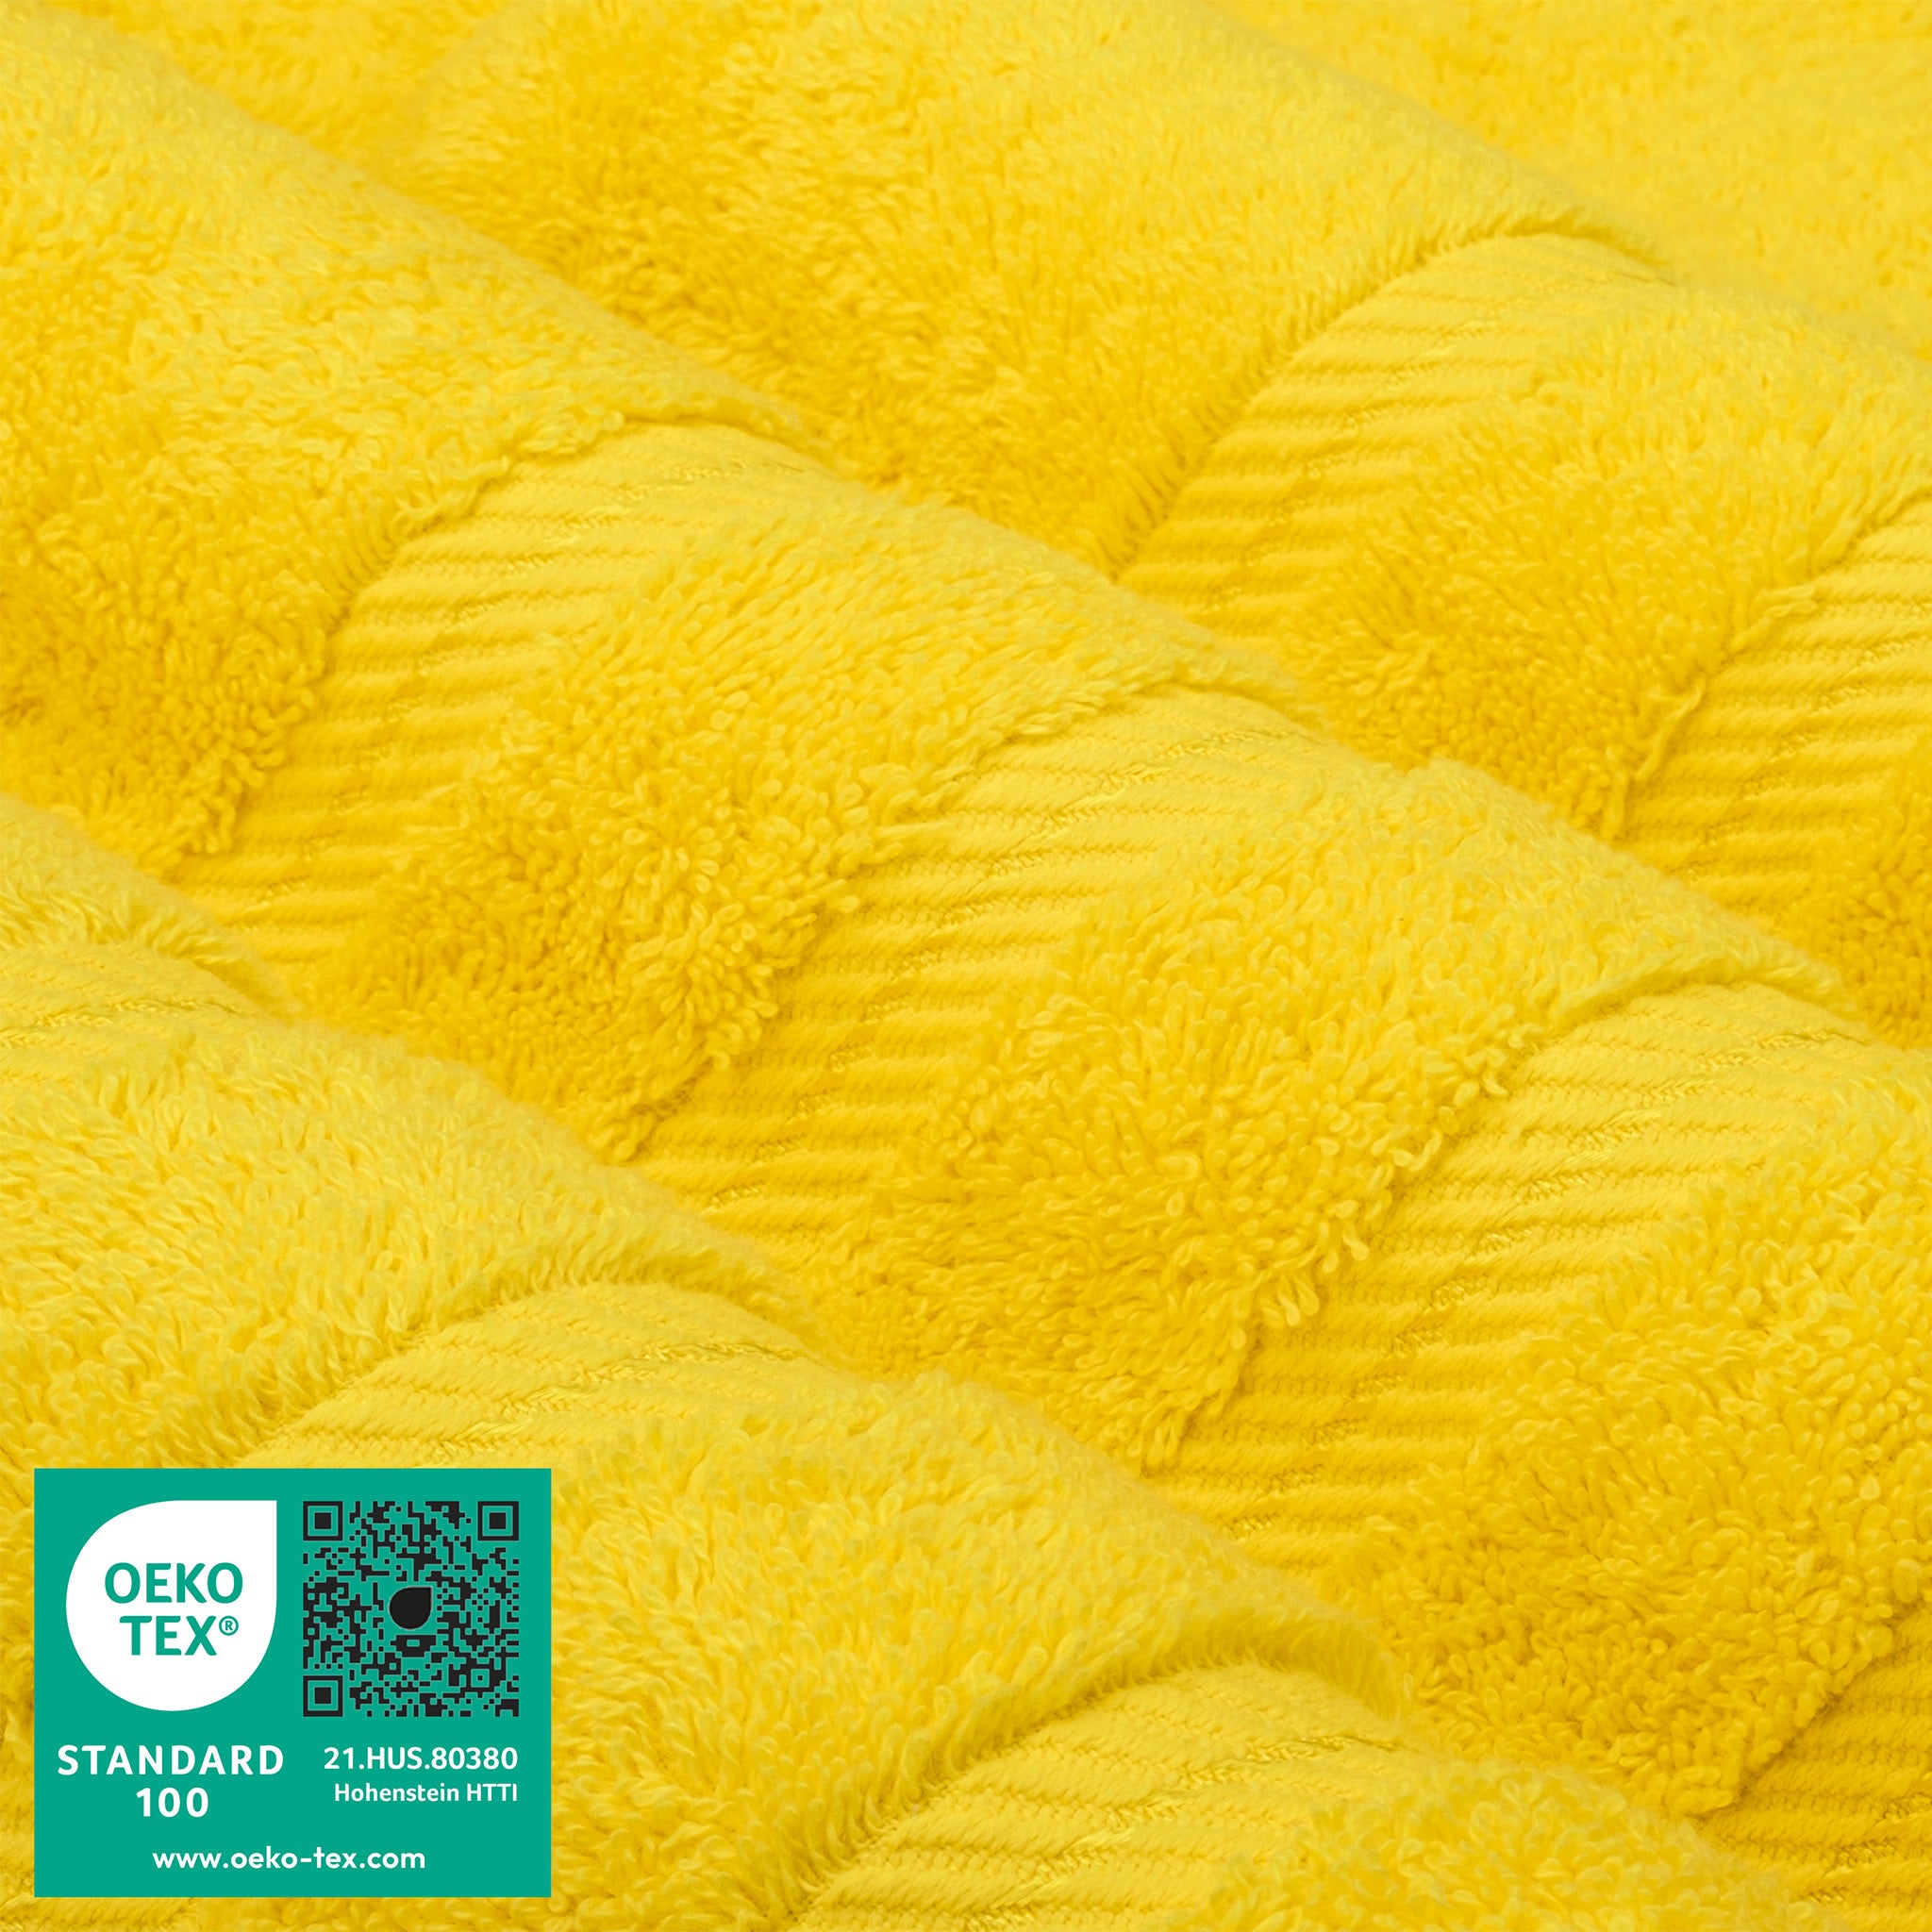 American Soft Linen 100% Turkish Cotton 4 Pack Bath Towel Set Wholesale yellow-3